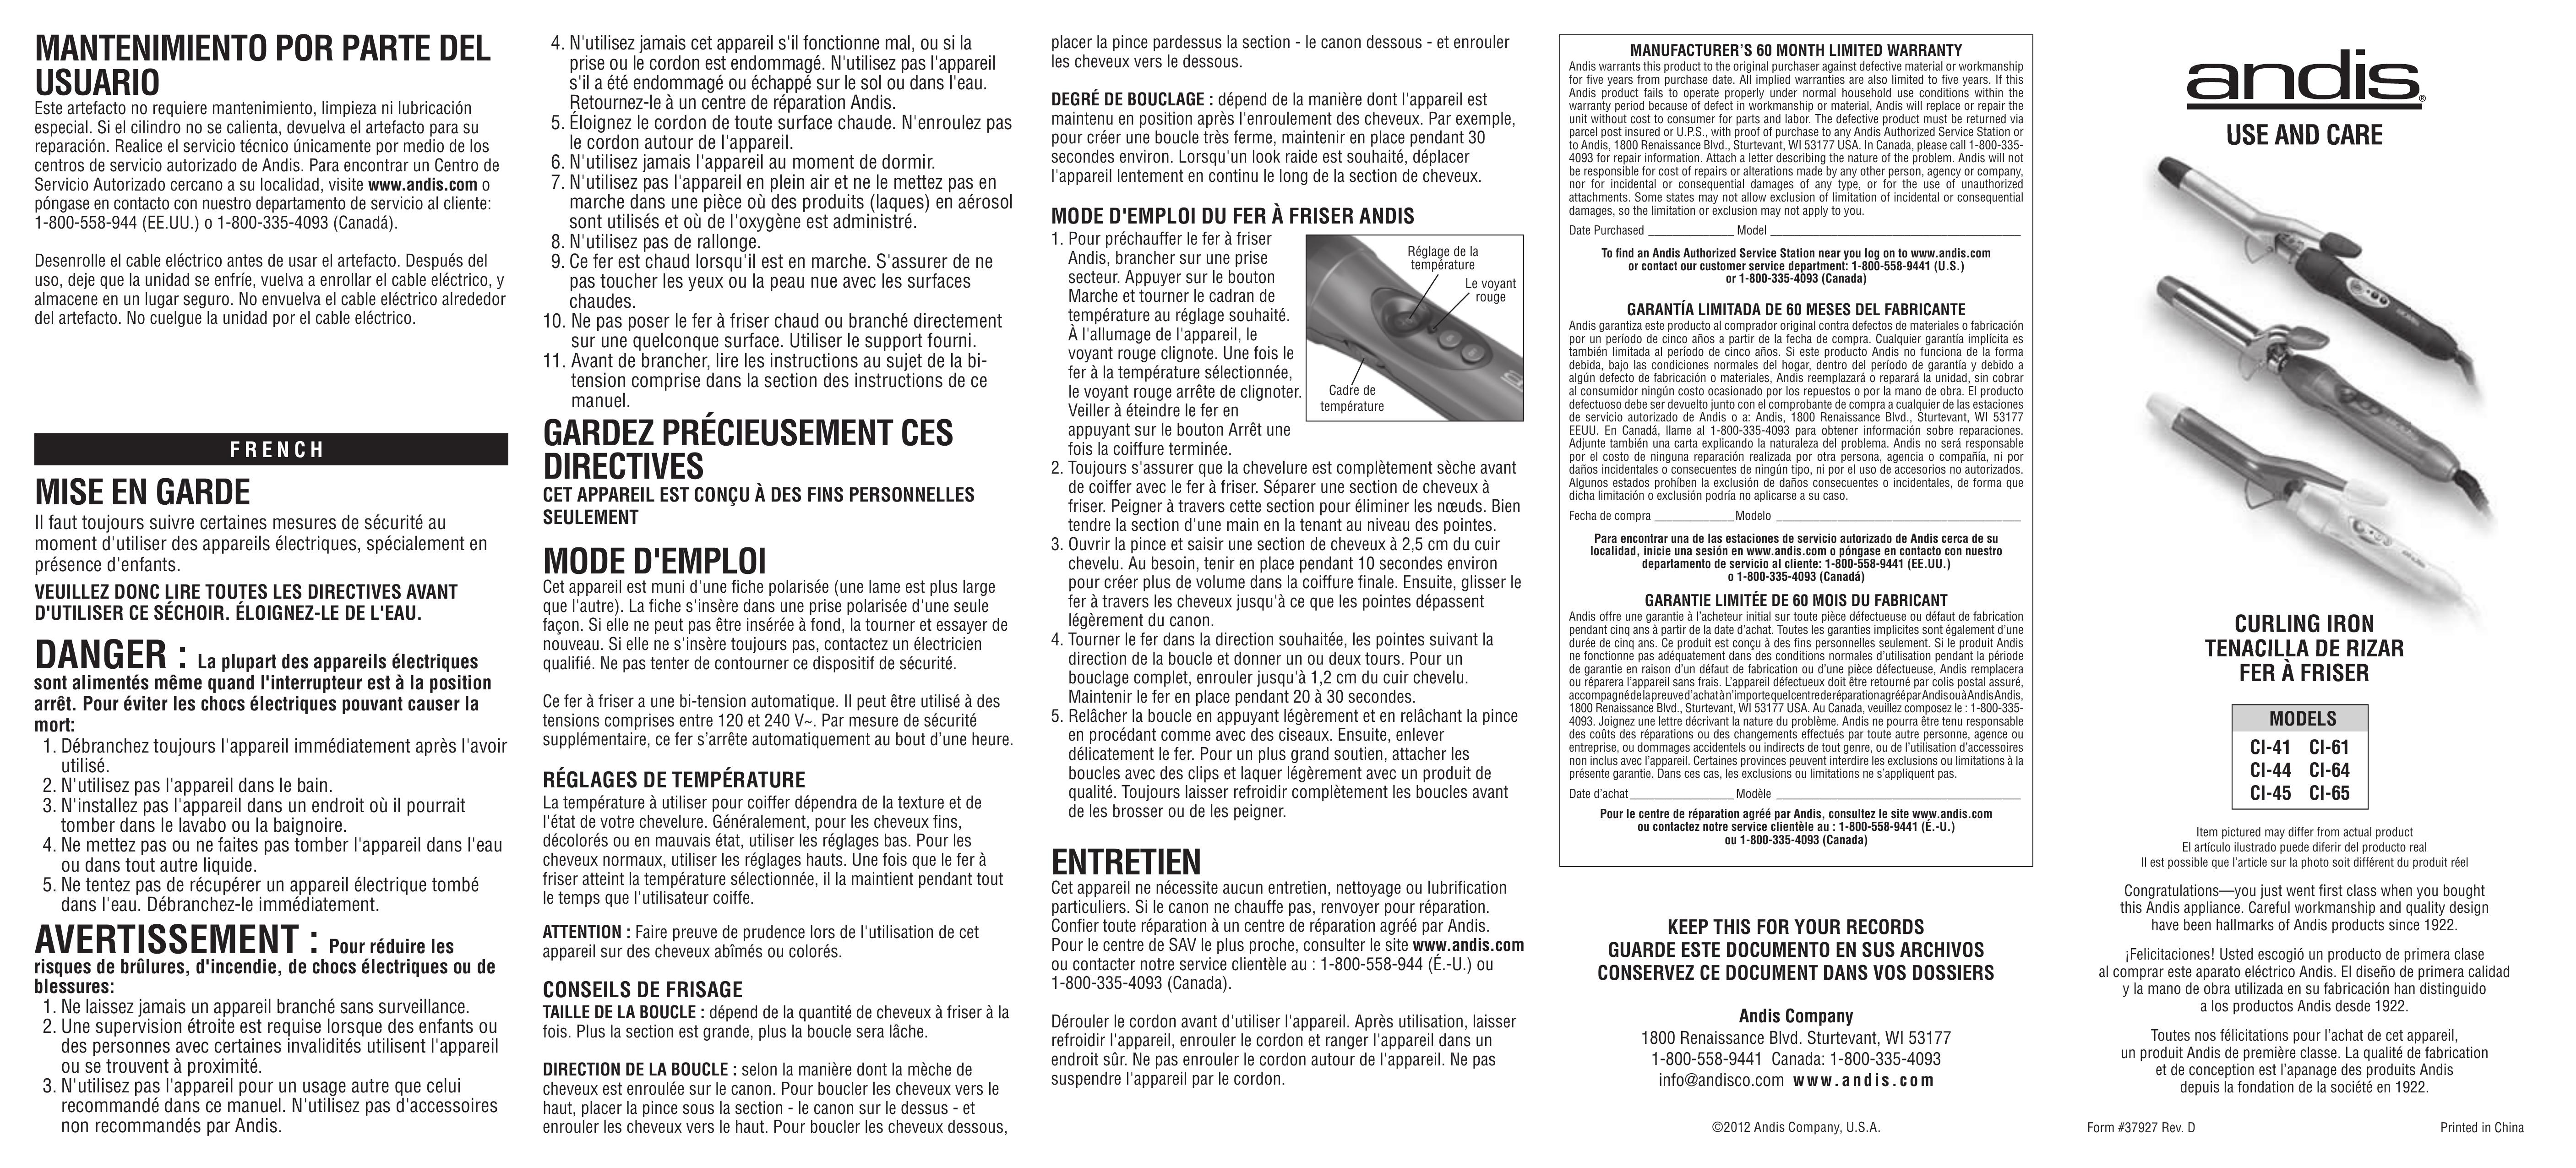 Andis Company CI-44 Styling Iron User Manual